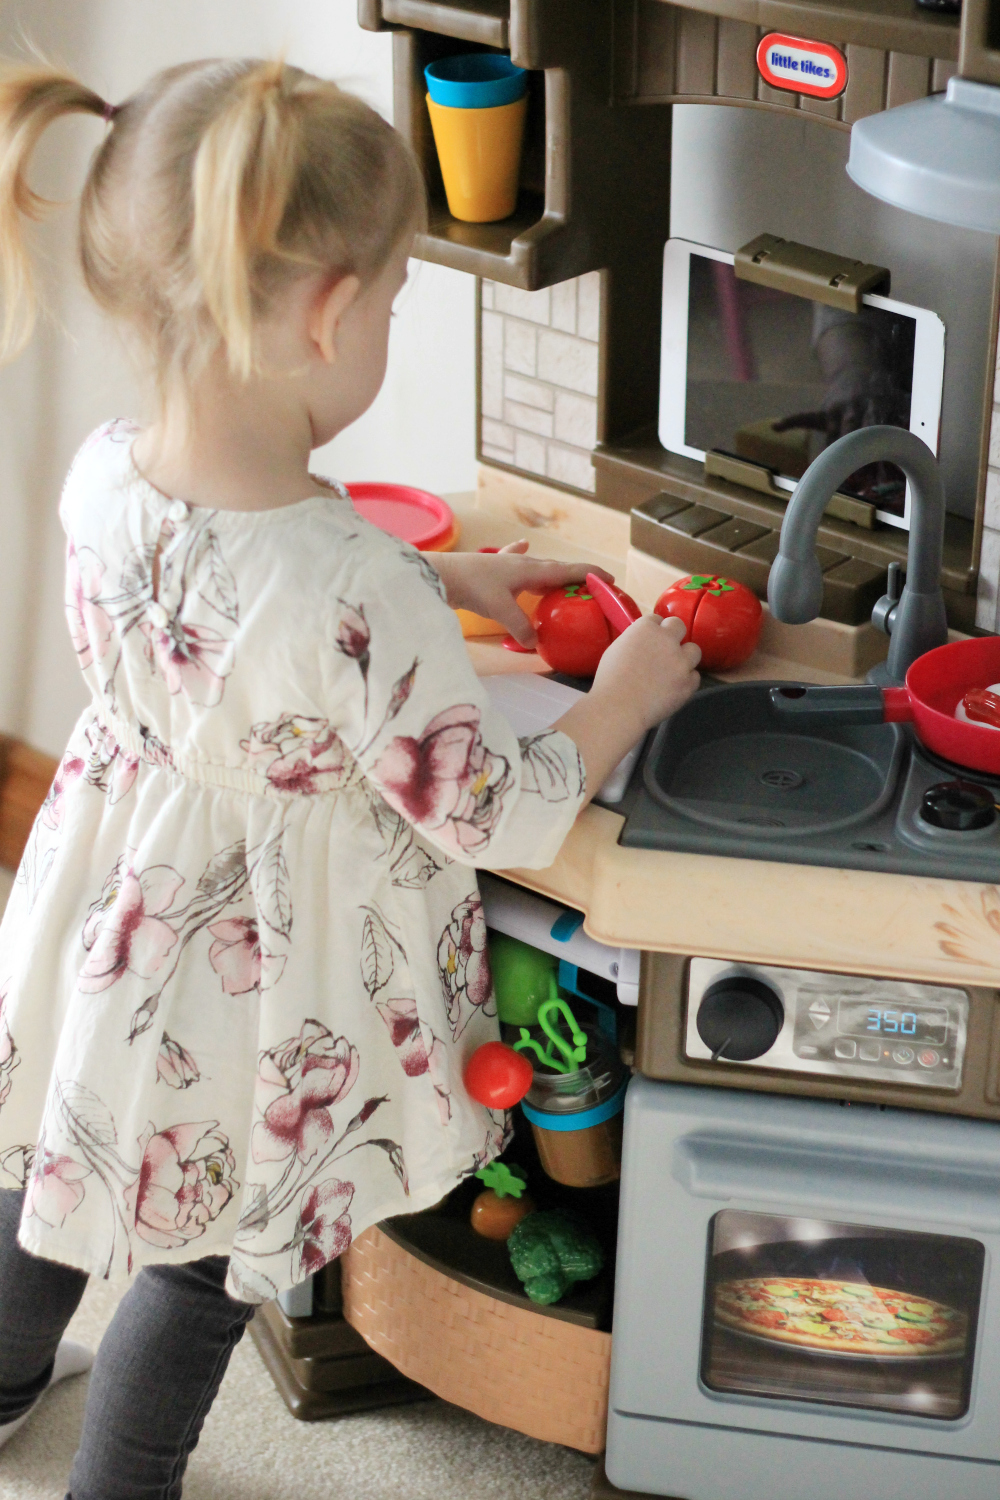 Little Tikes Cook 'N Learn Smart Kitchen